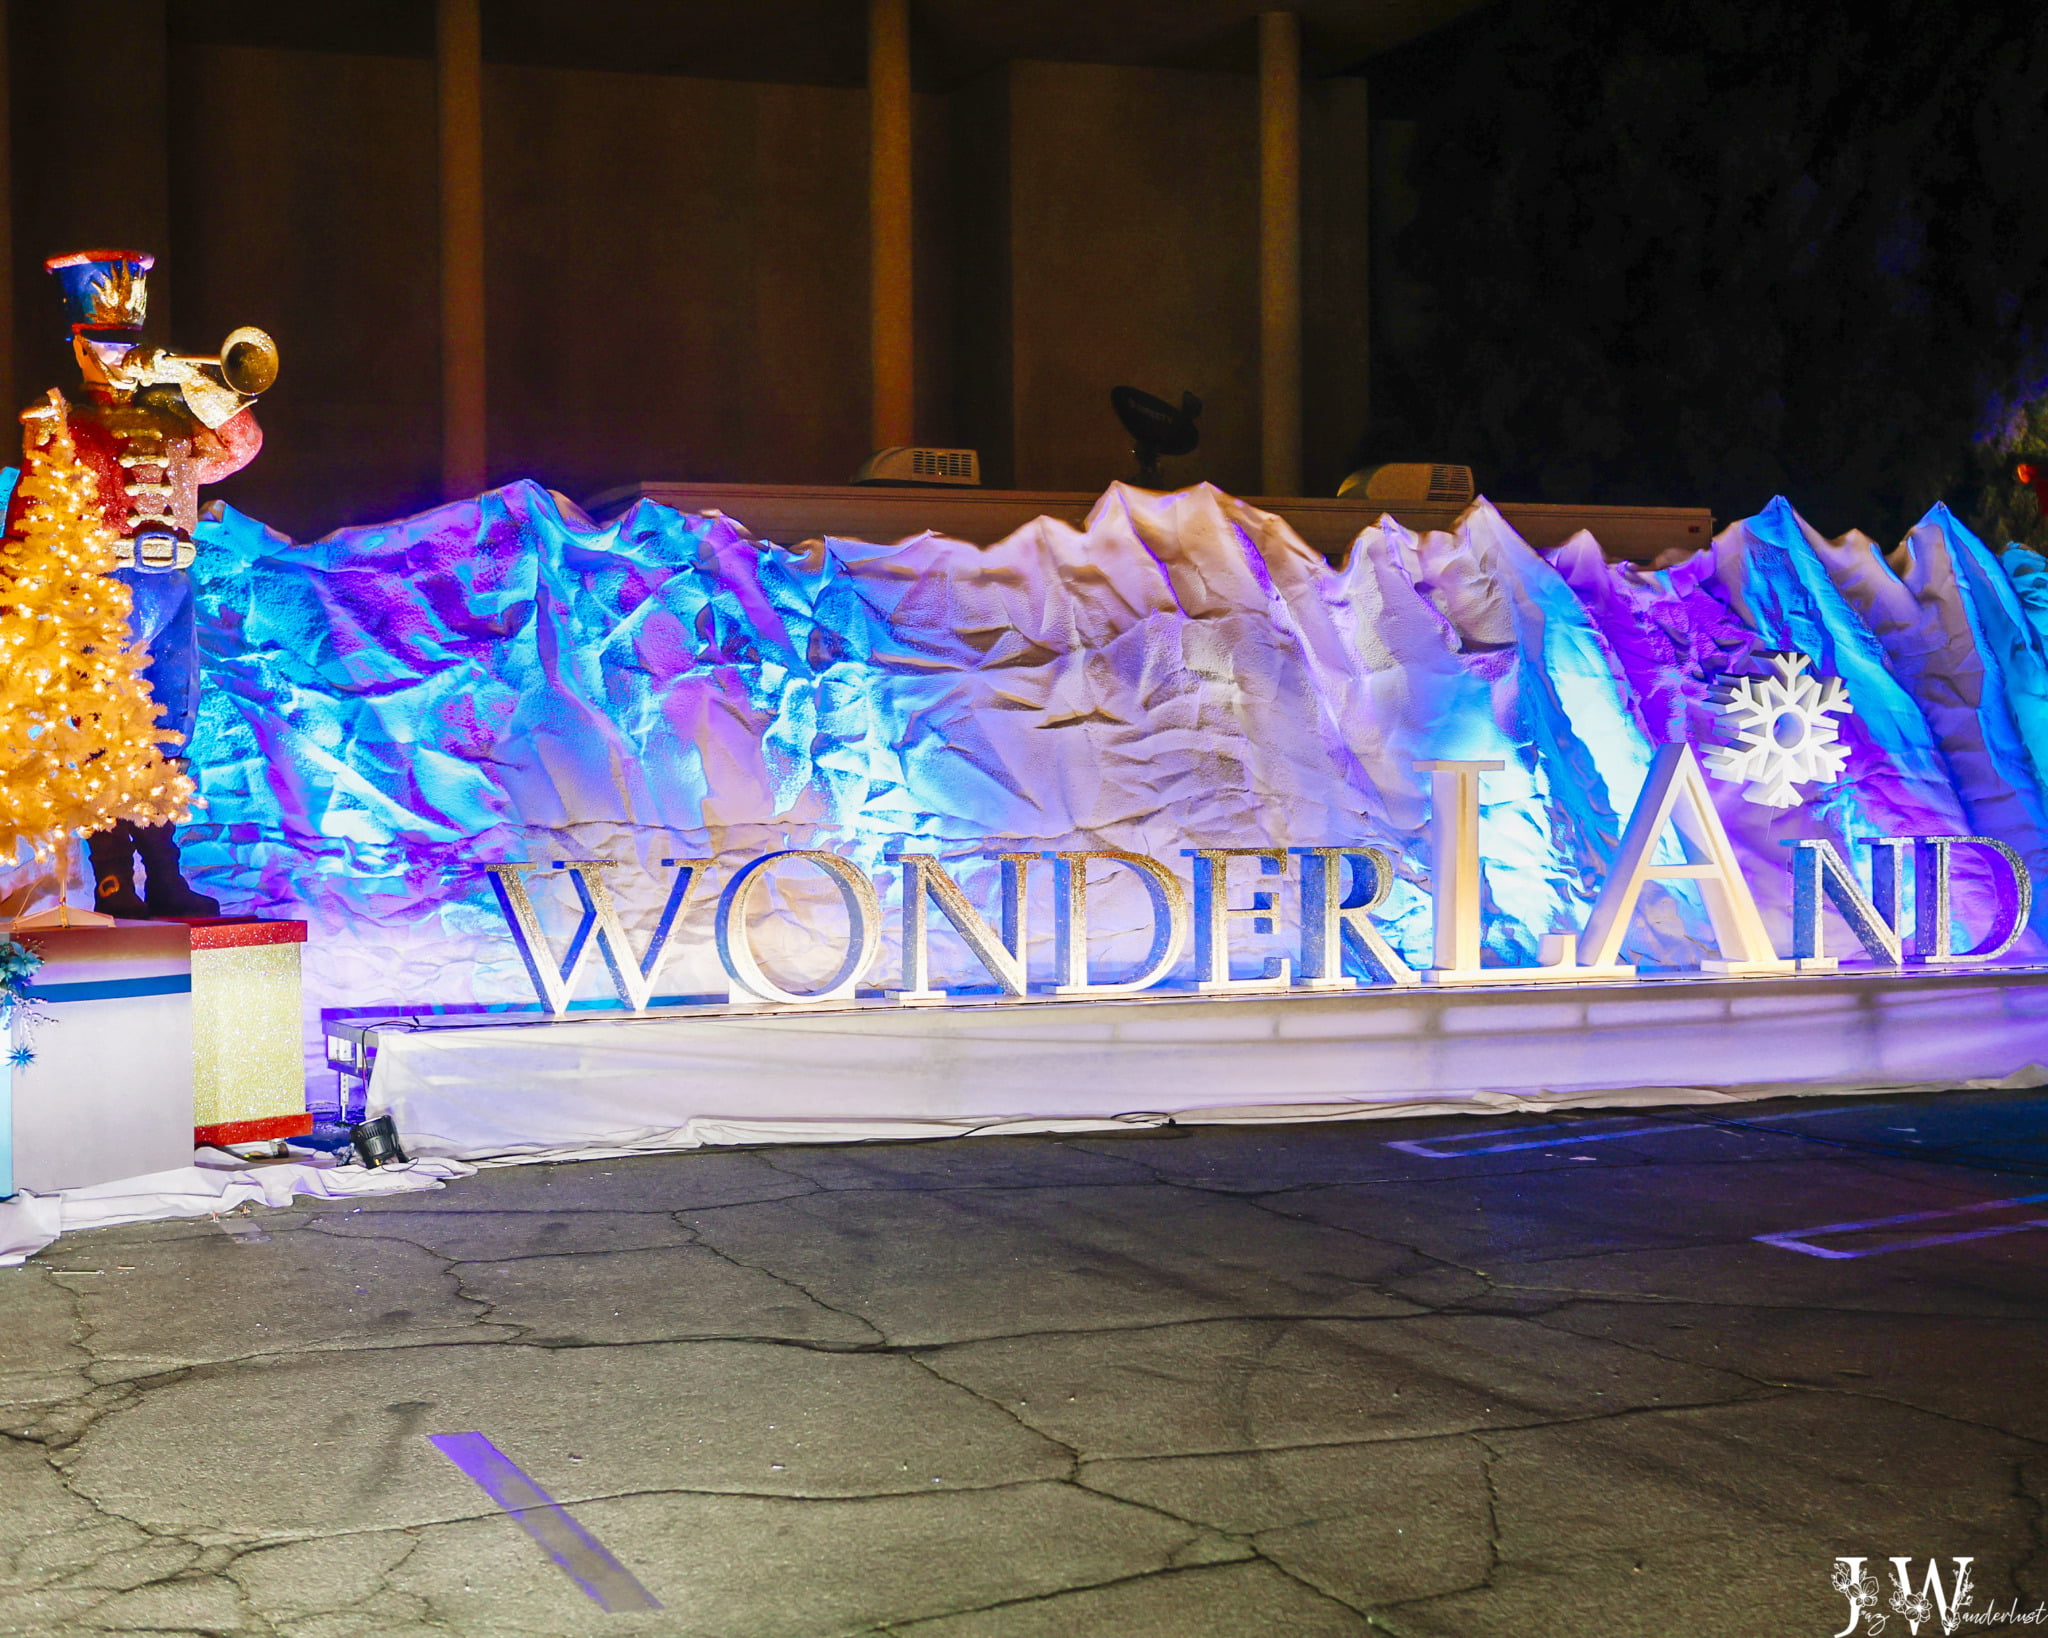 Wonderland in SoCal holiday display. Photography by Jaz Wanderlust.